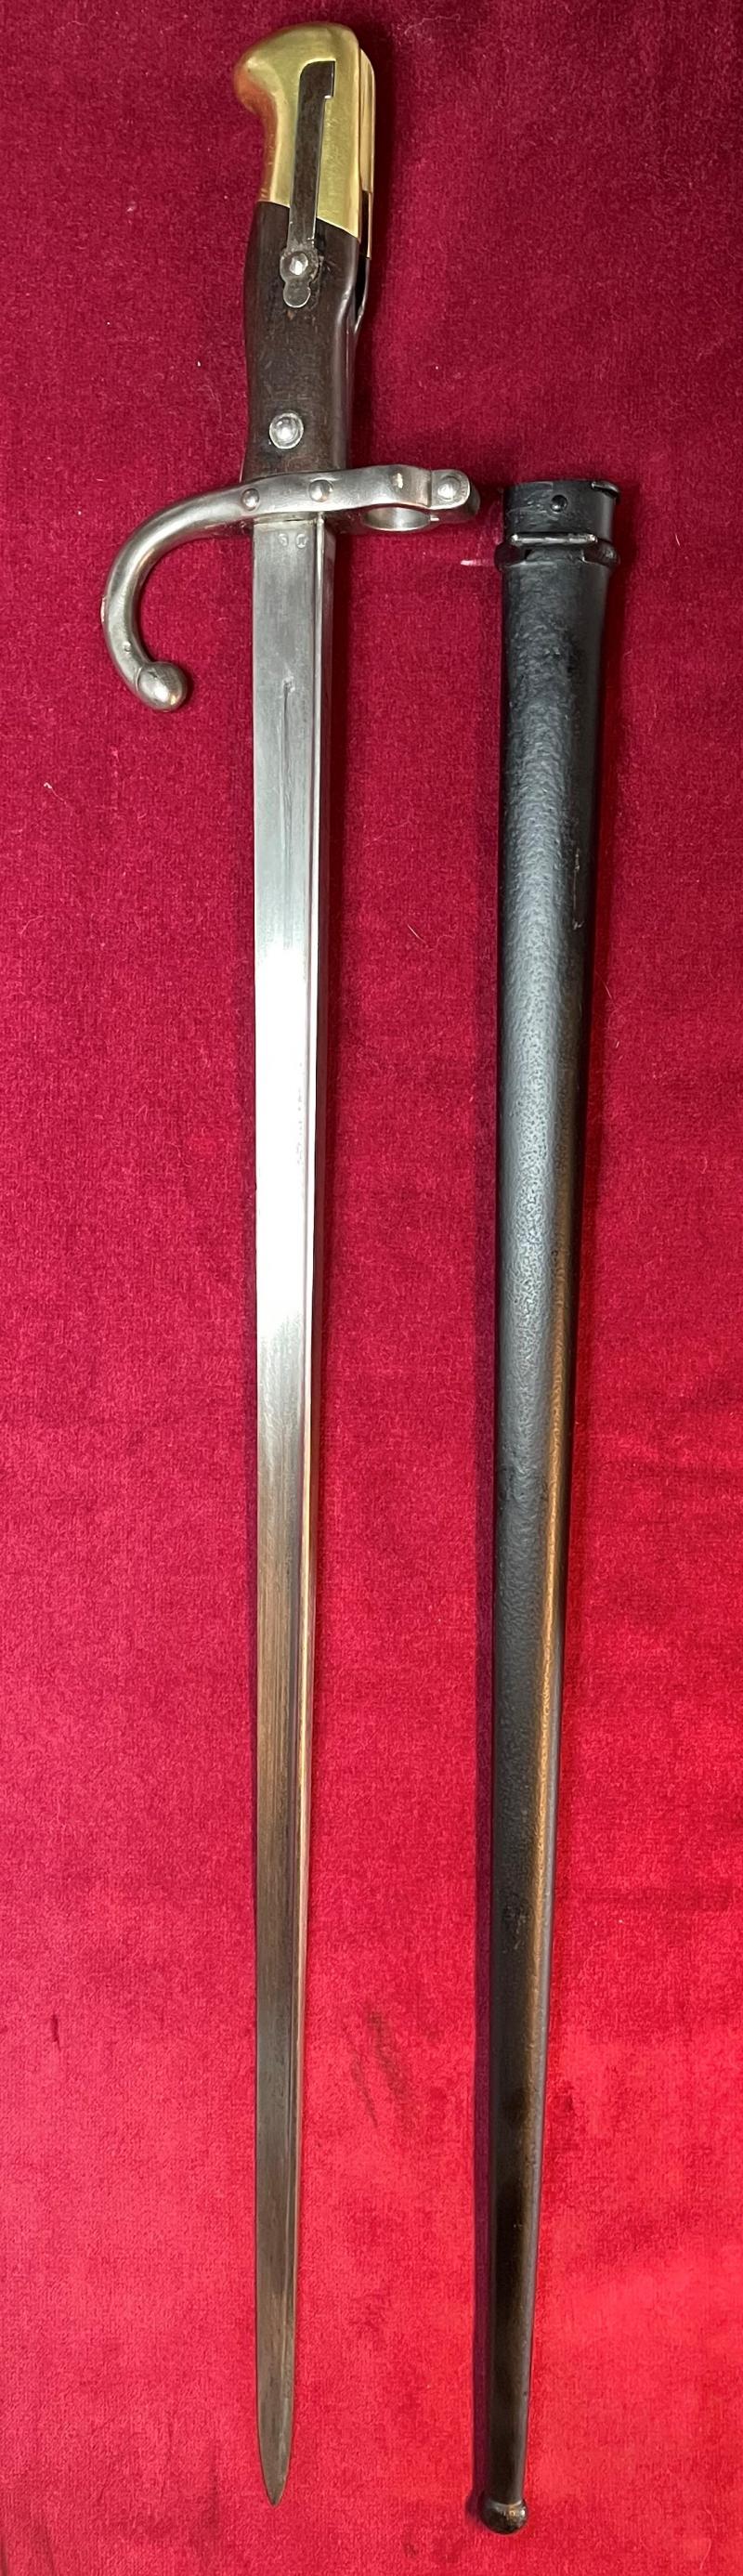 M1874 French Gras sword Bayonet - St. Etienne 1876